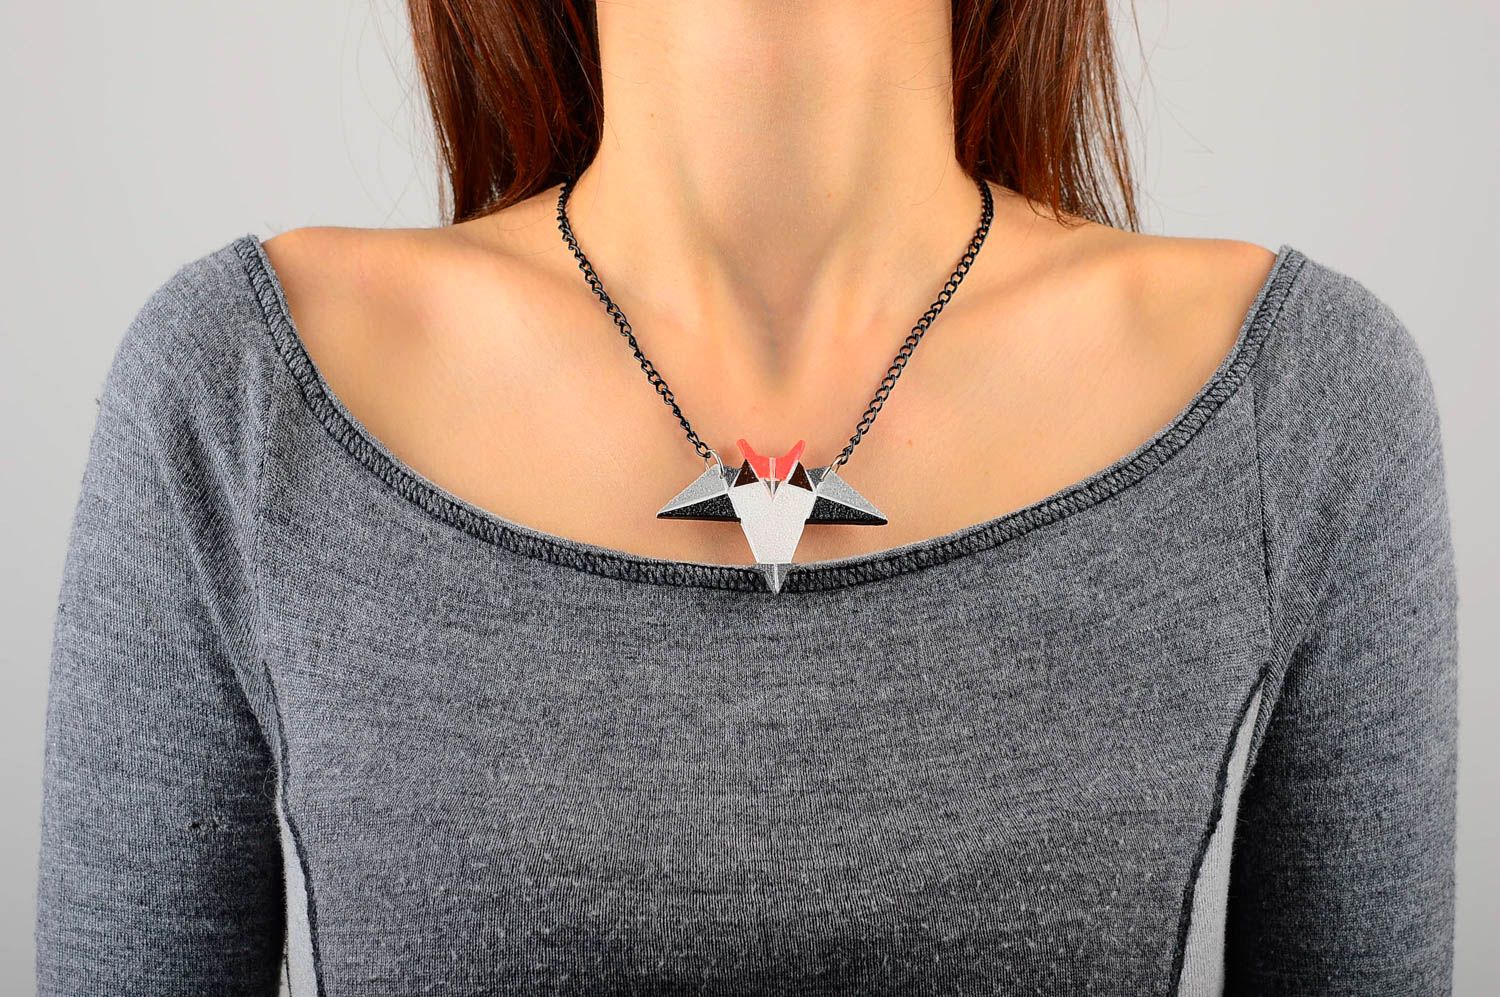 Unusual handmade neck pendant neck pendant for women fashion trends for girls photo 1